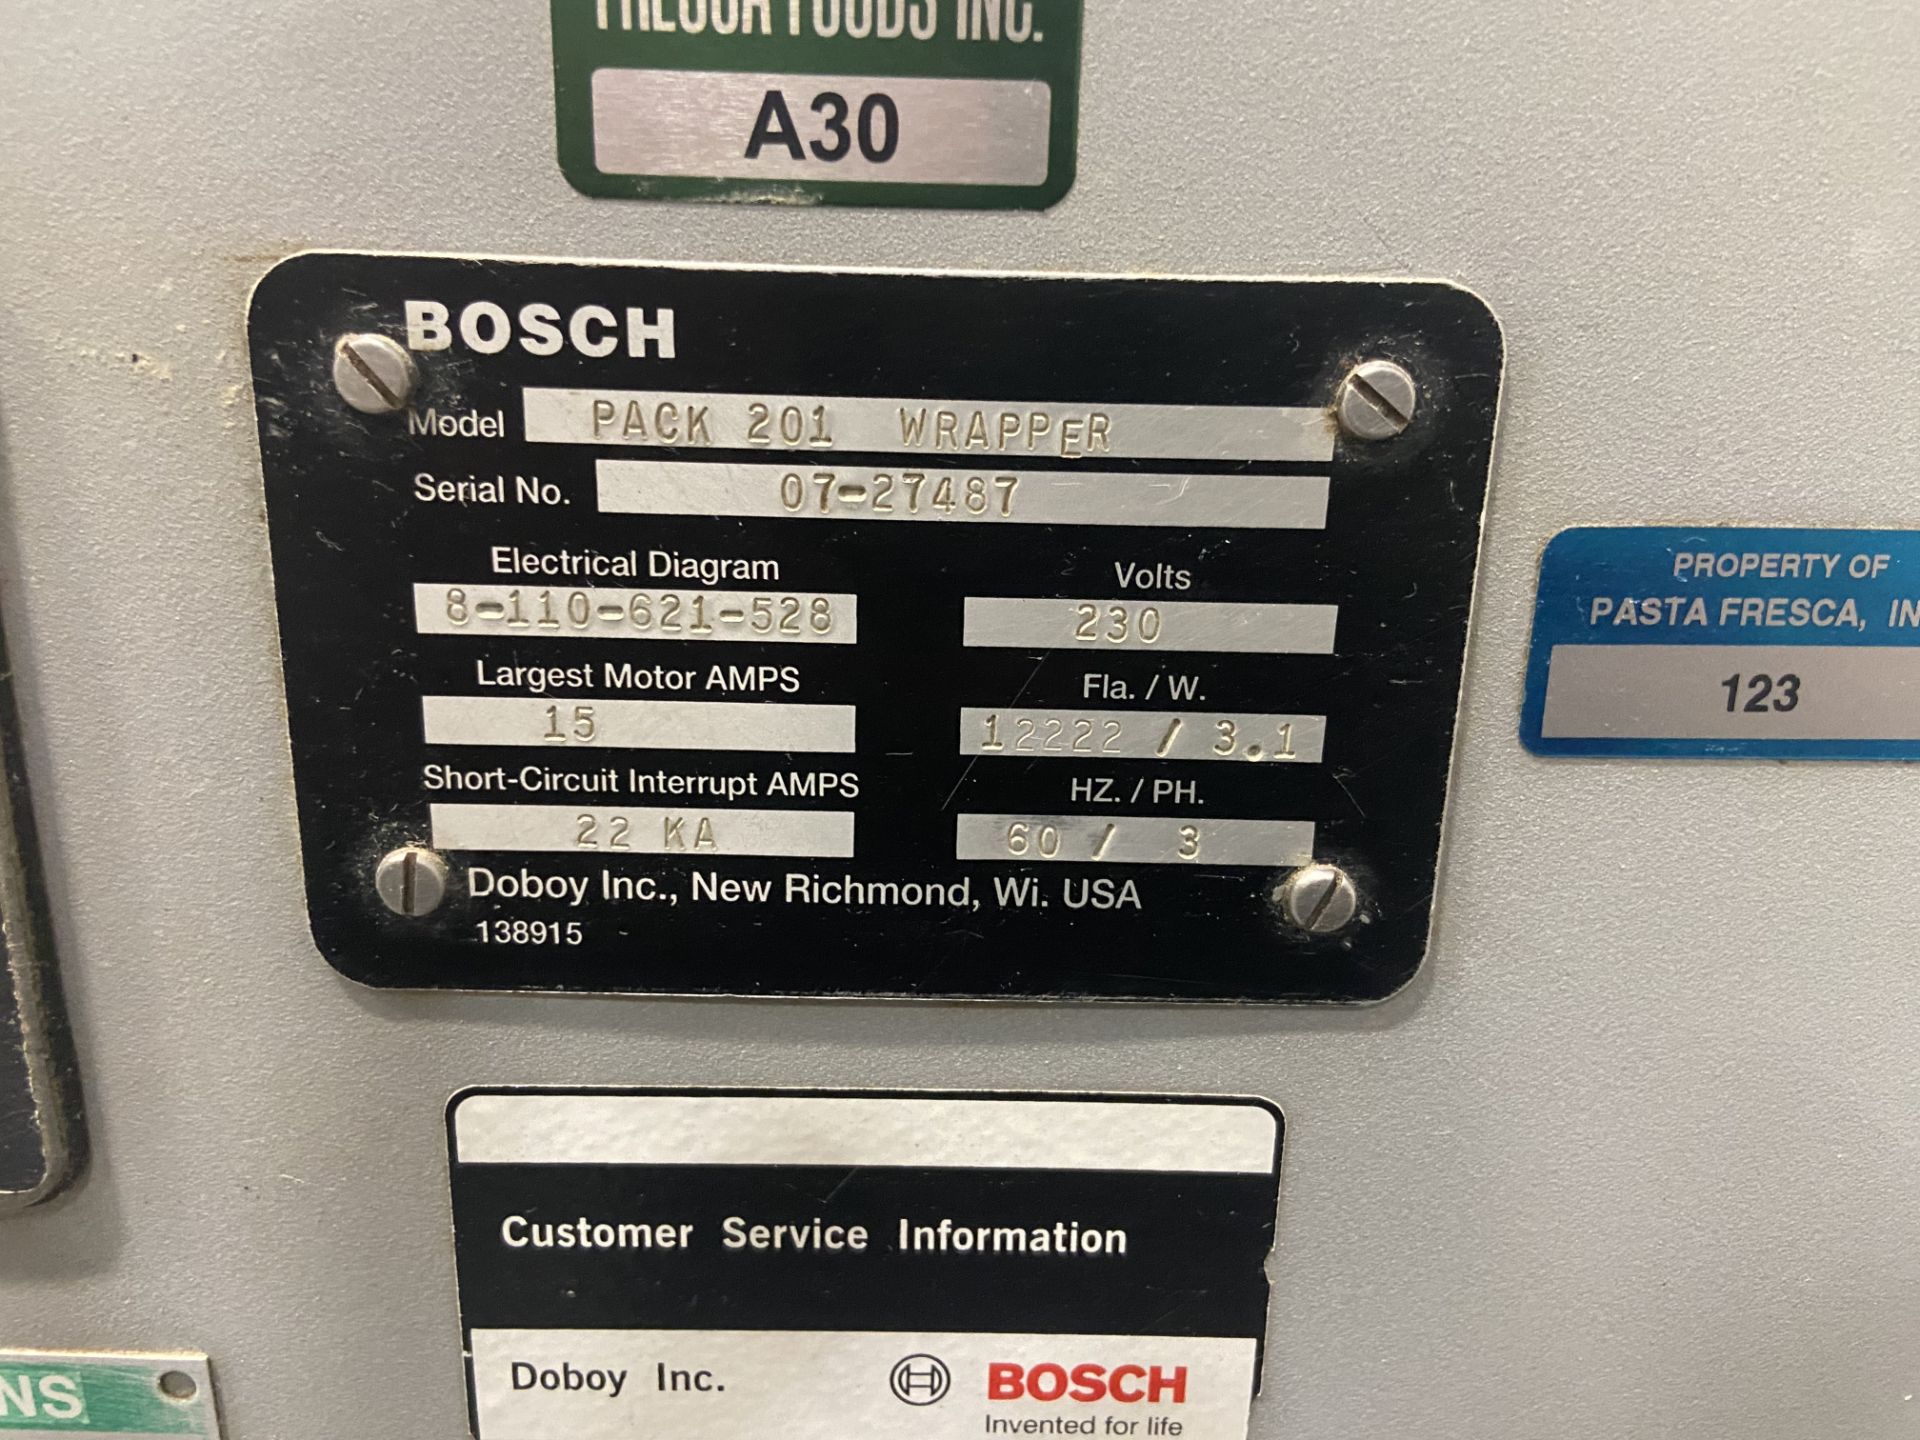 Bosch Pack 201 Flowwrapper S/N 07-27487 - Image 6 of 11